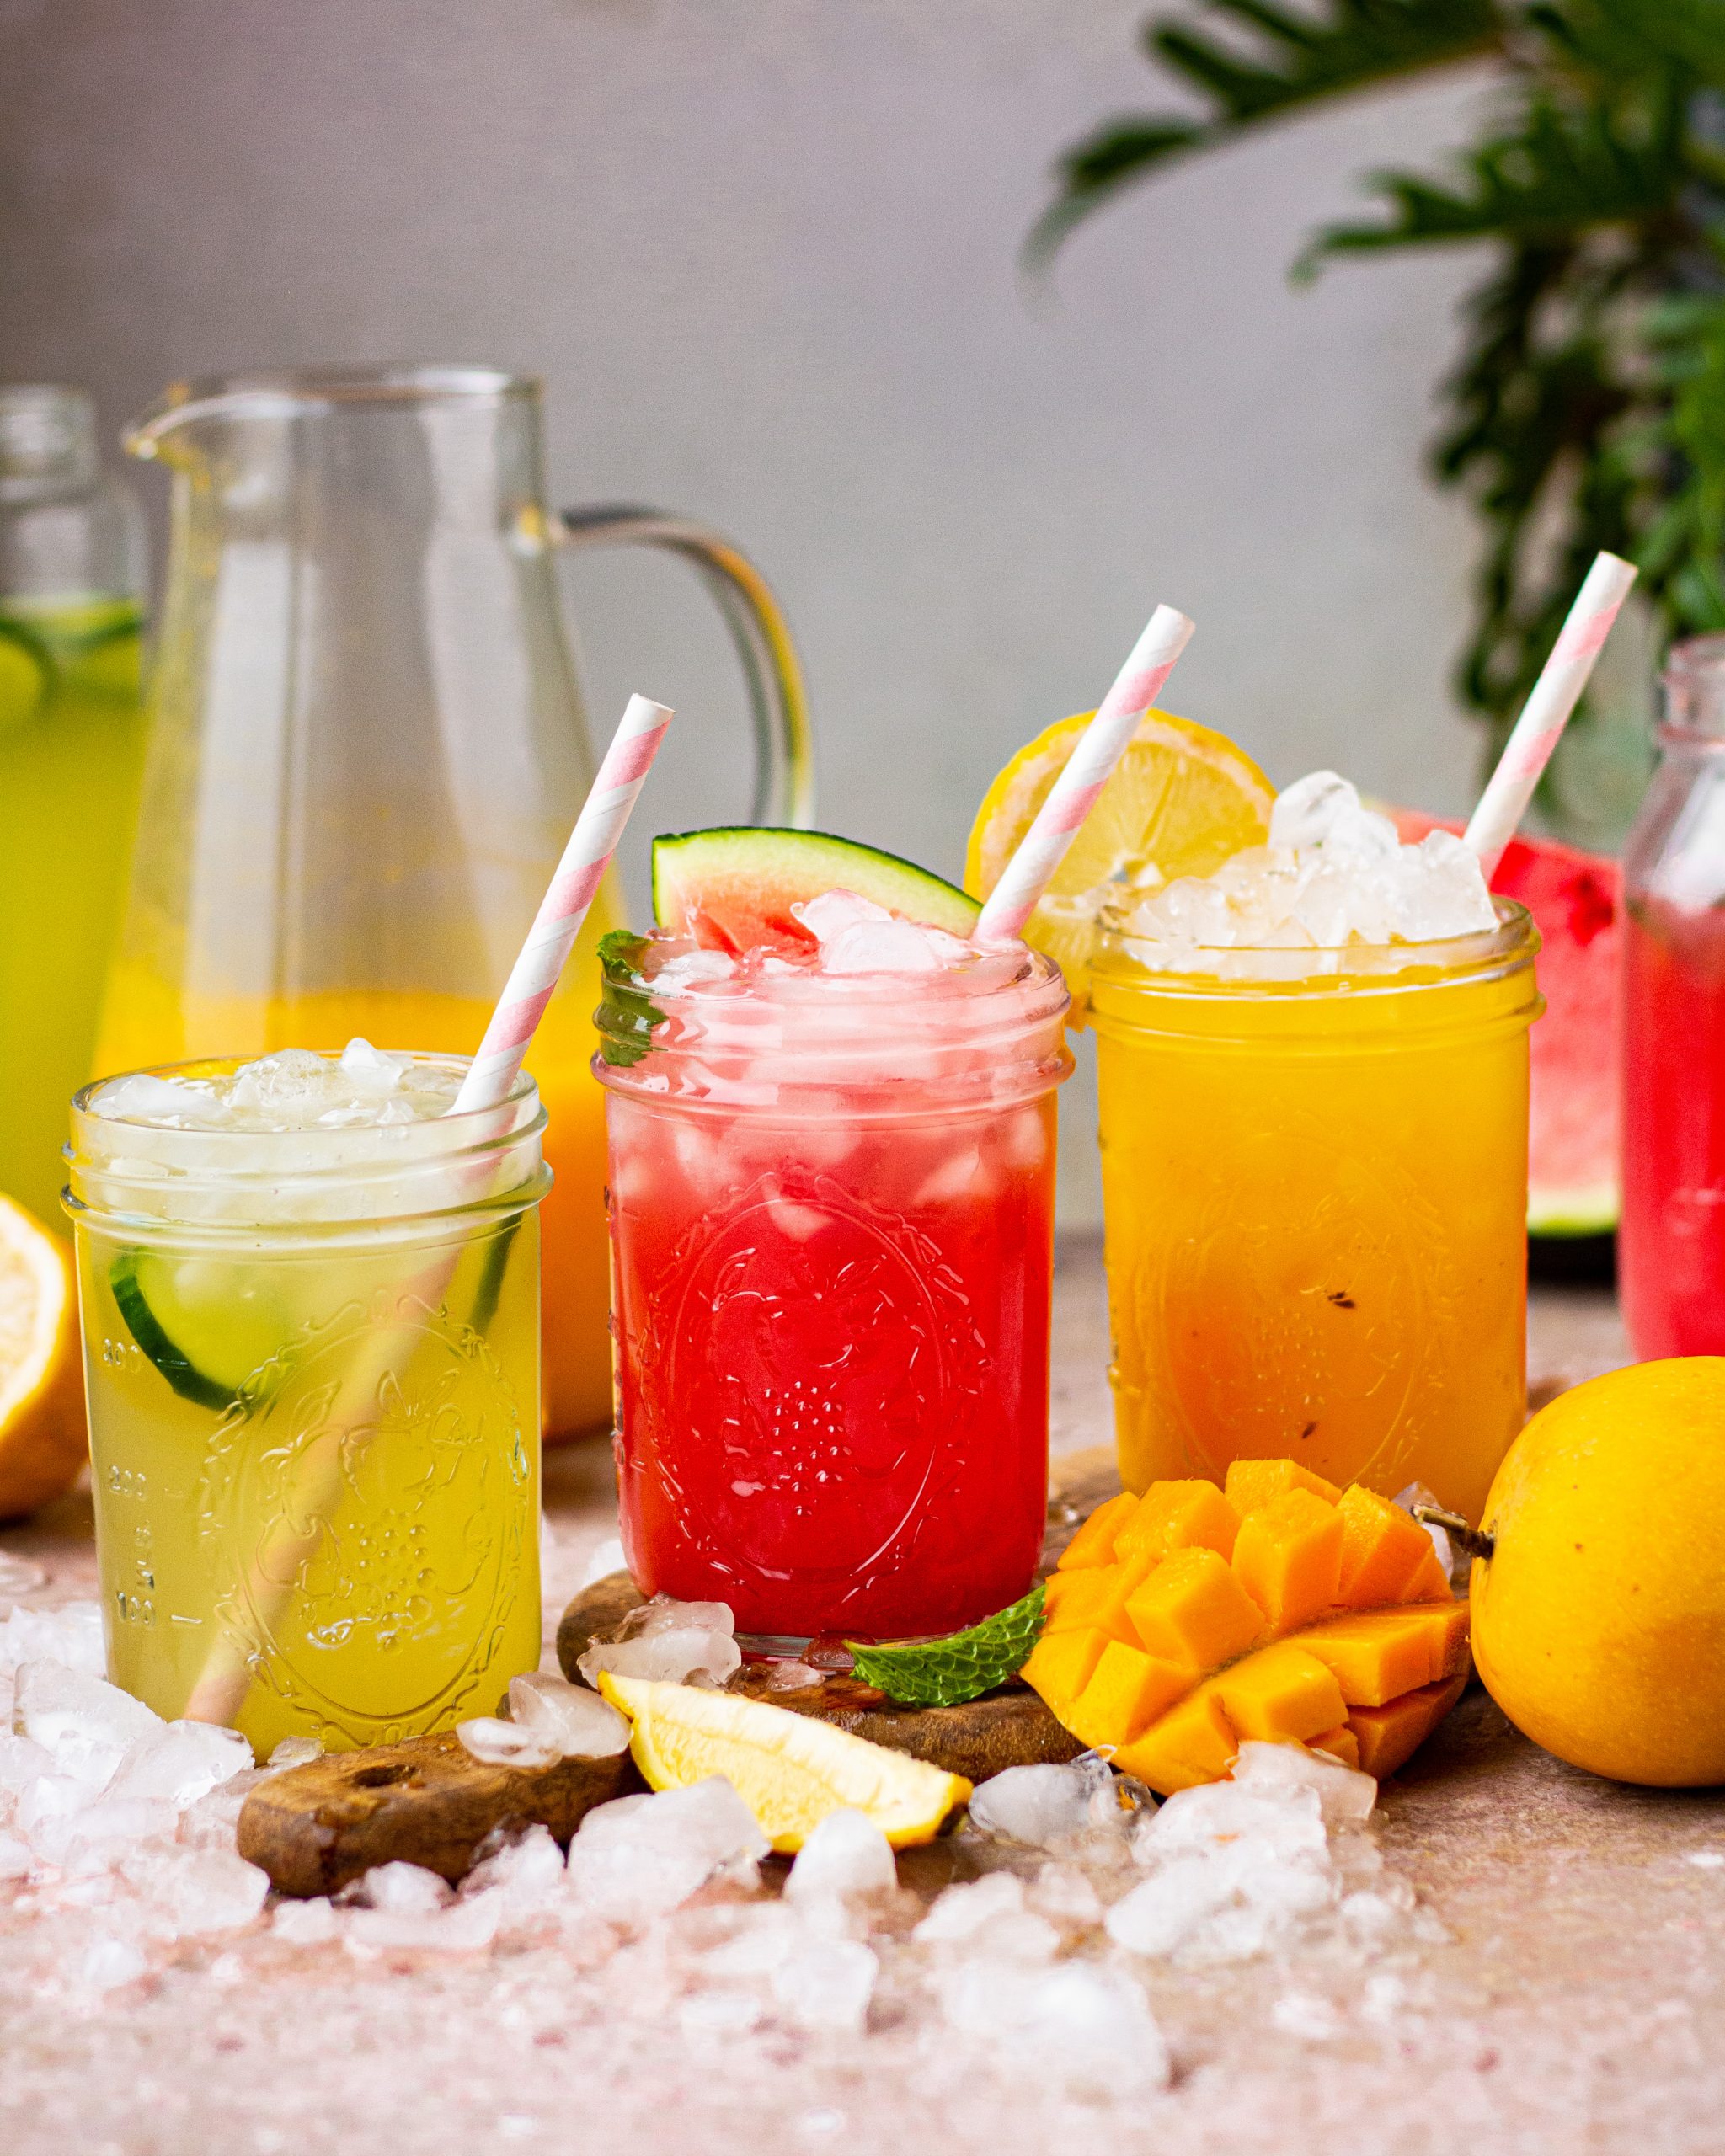 refreshing summer drinks